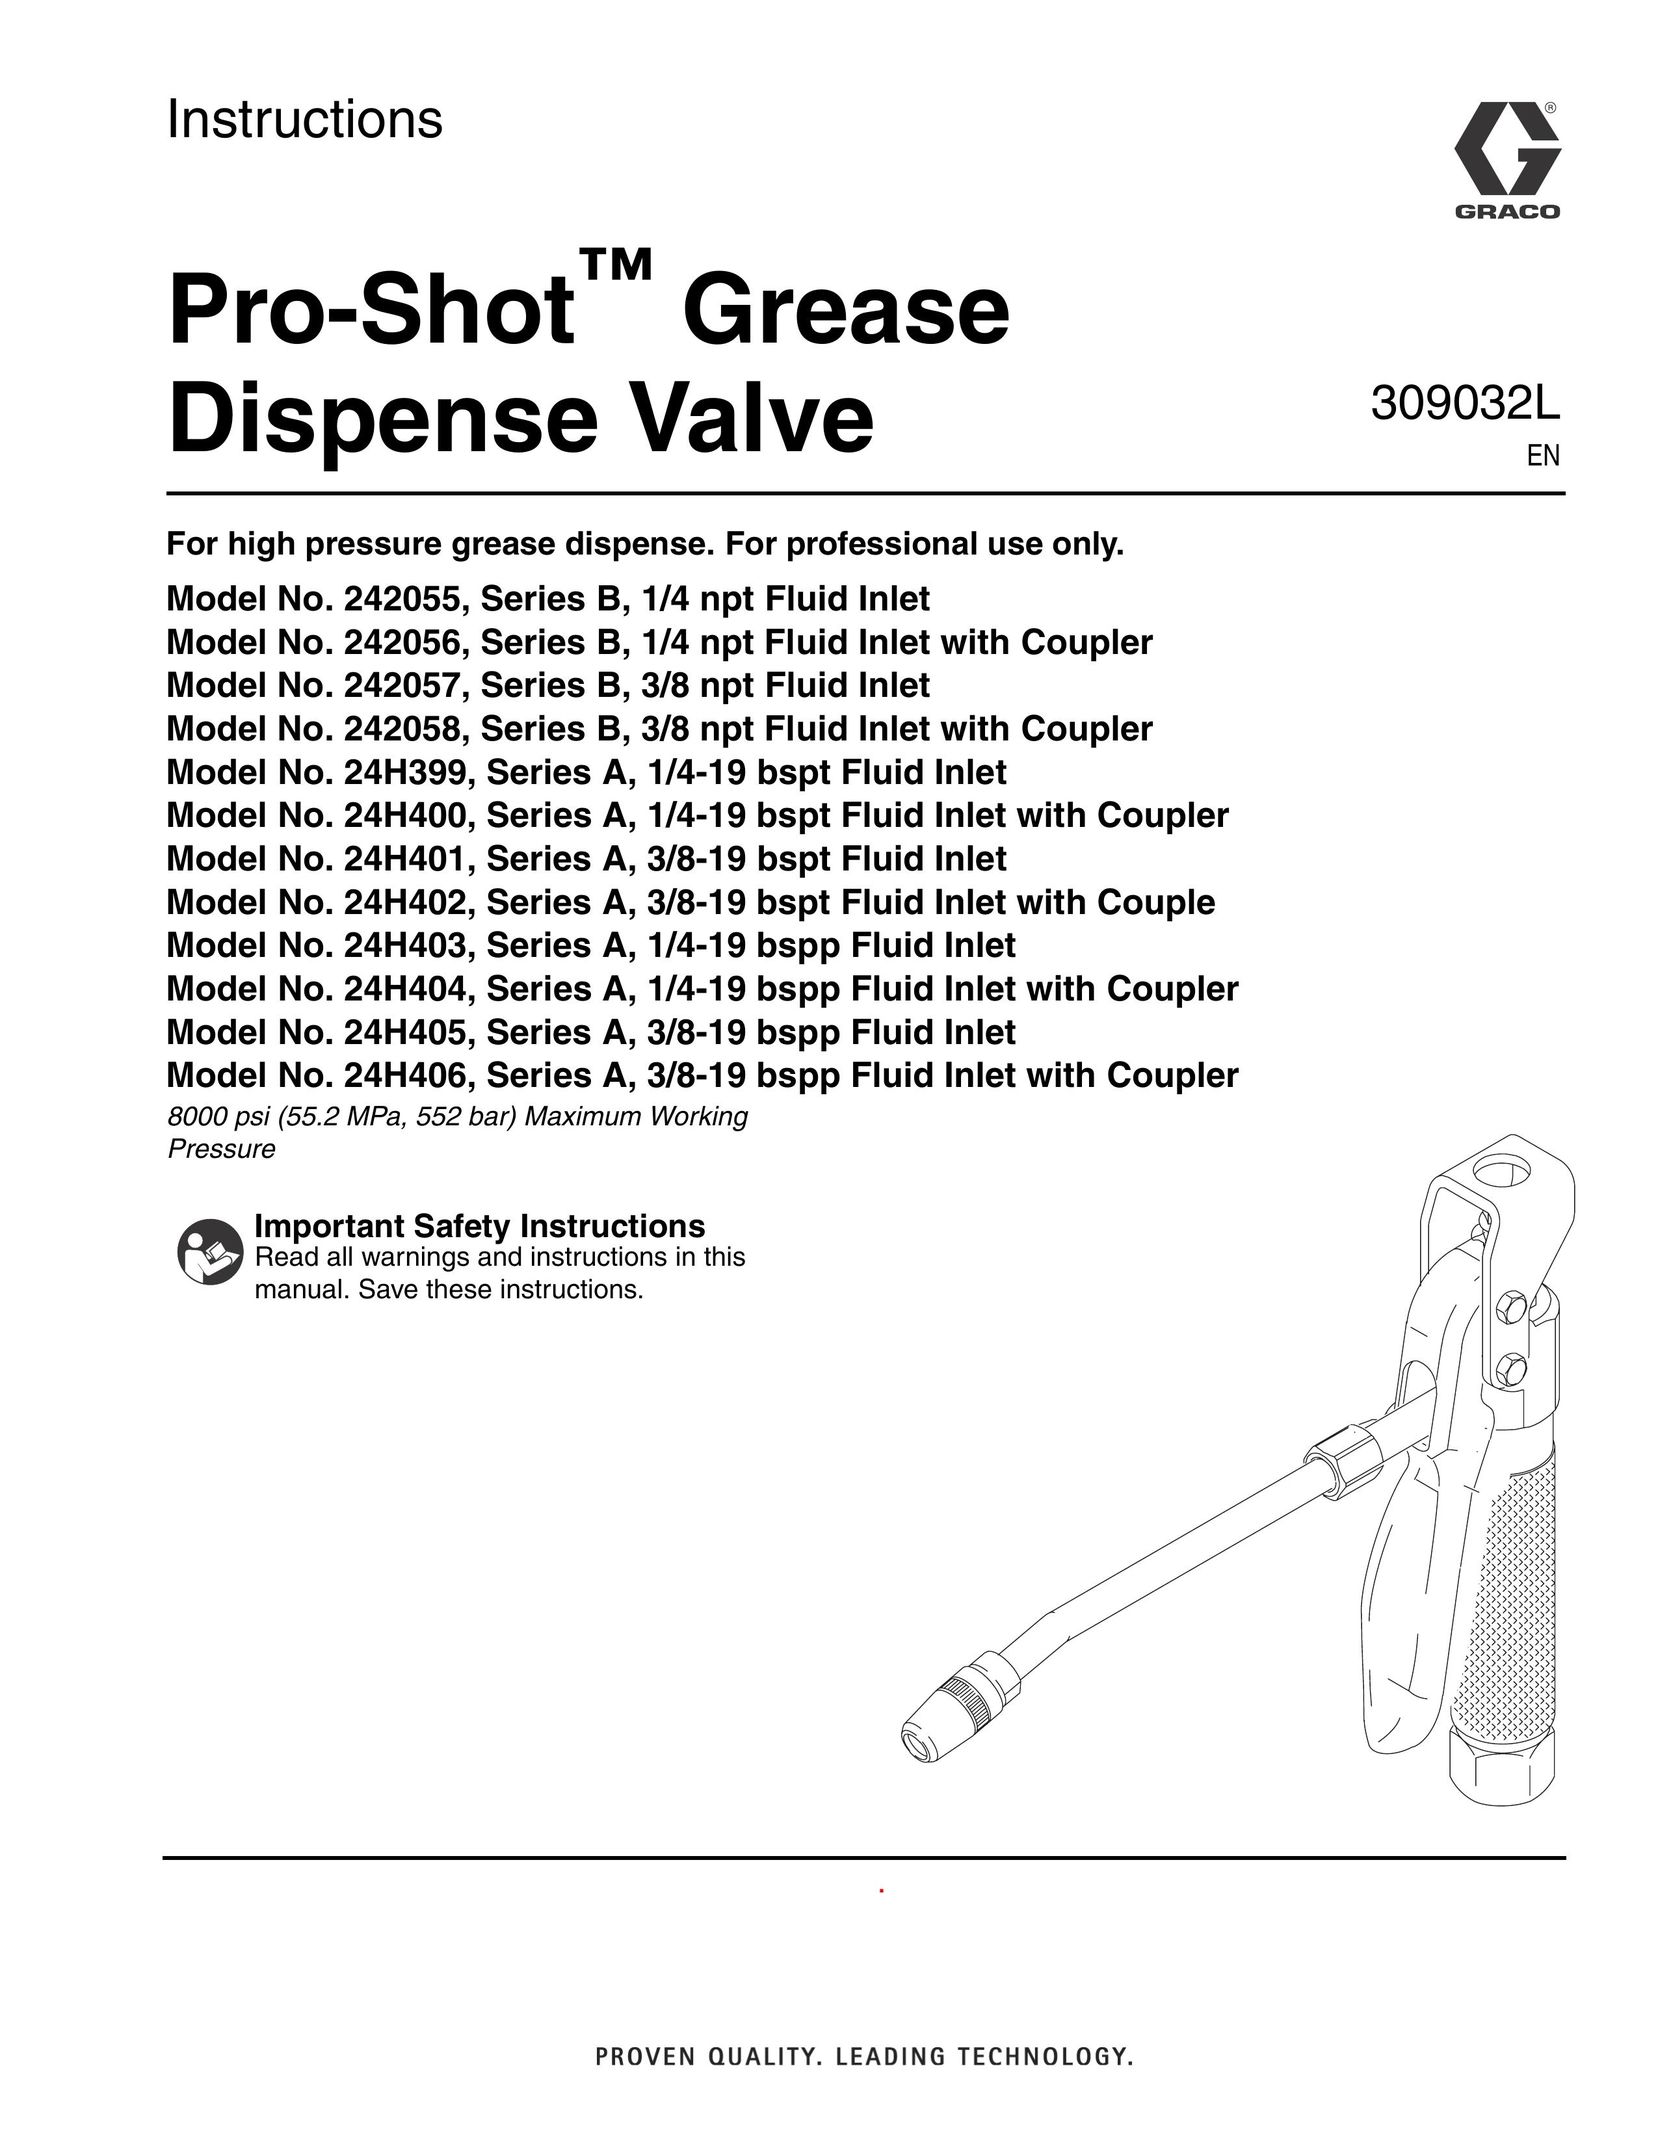 Graco 24H405 Glue Gun User Manual